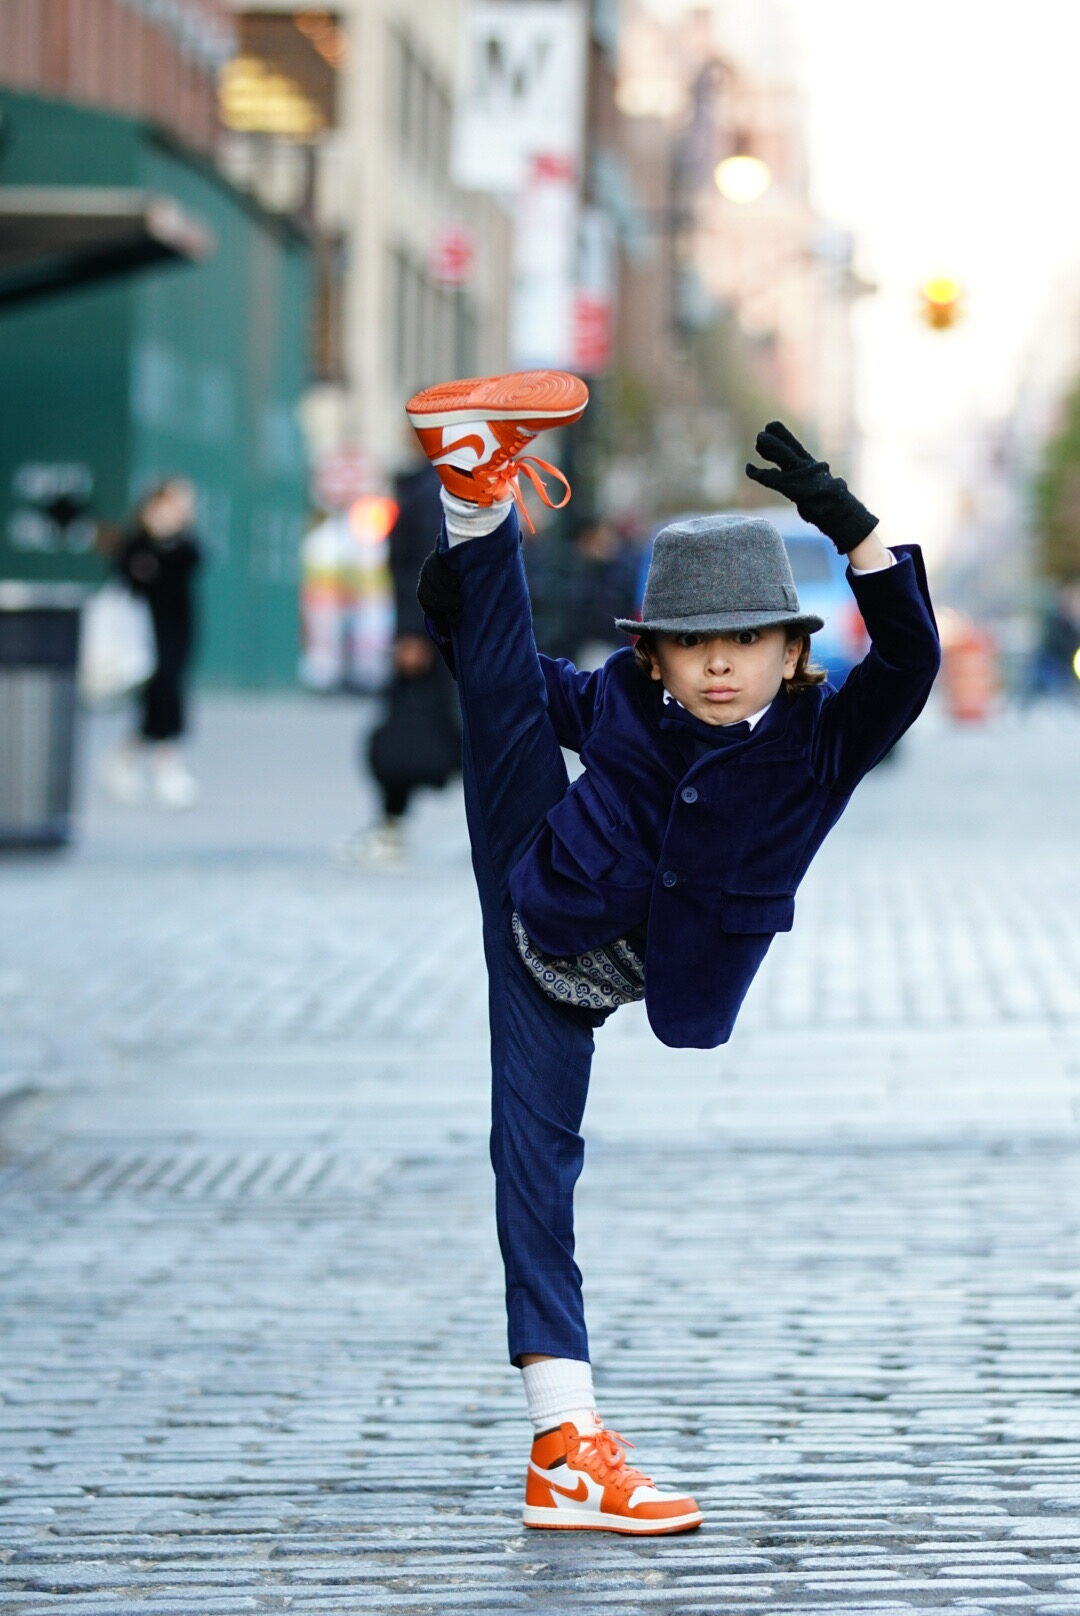 boy dancing in street